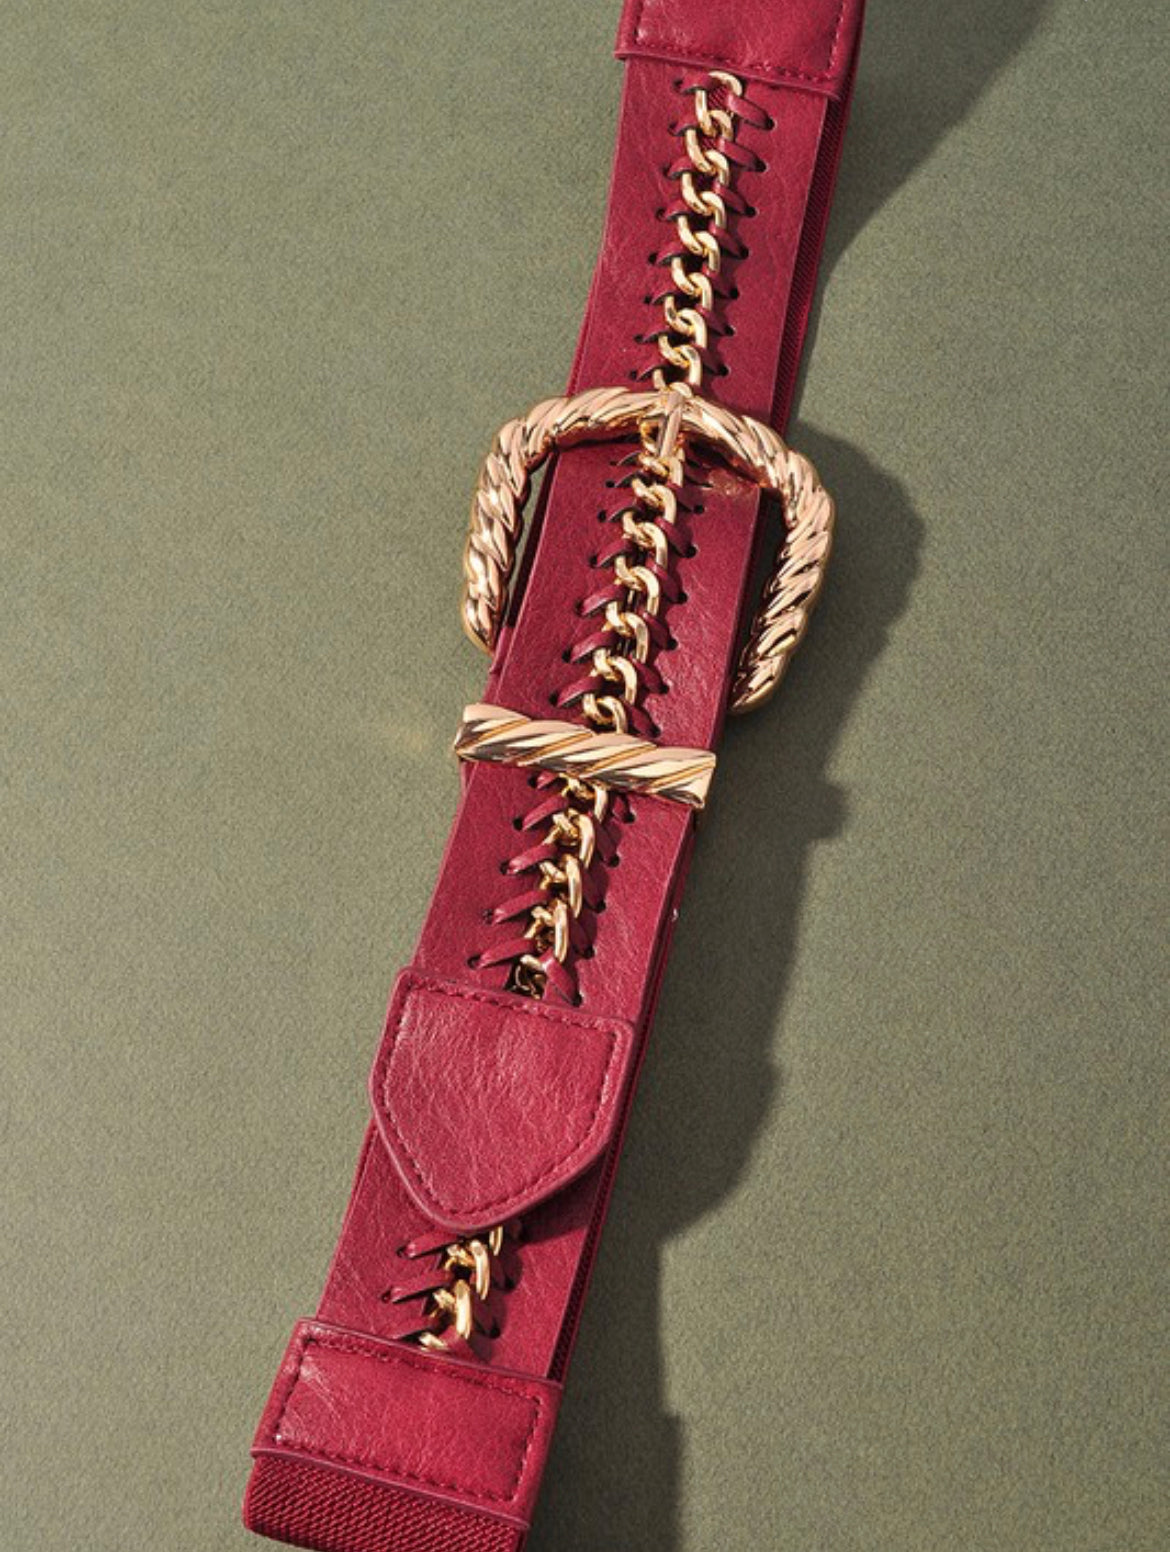 Leather Chain Belt